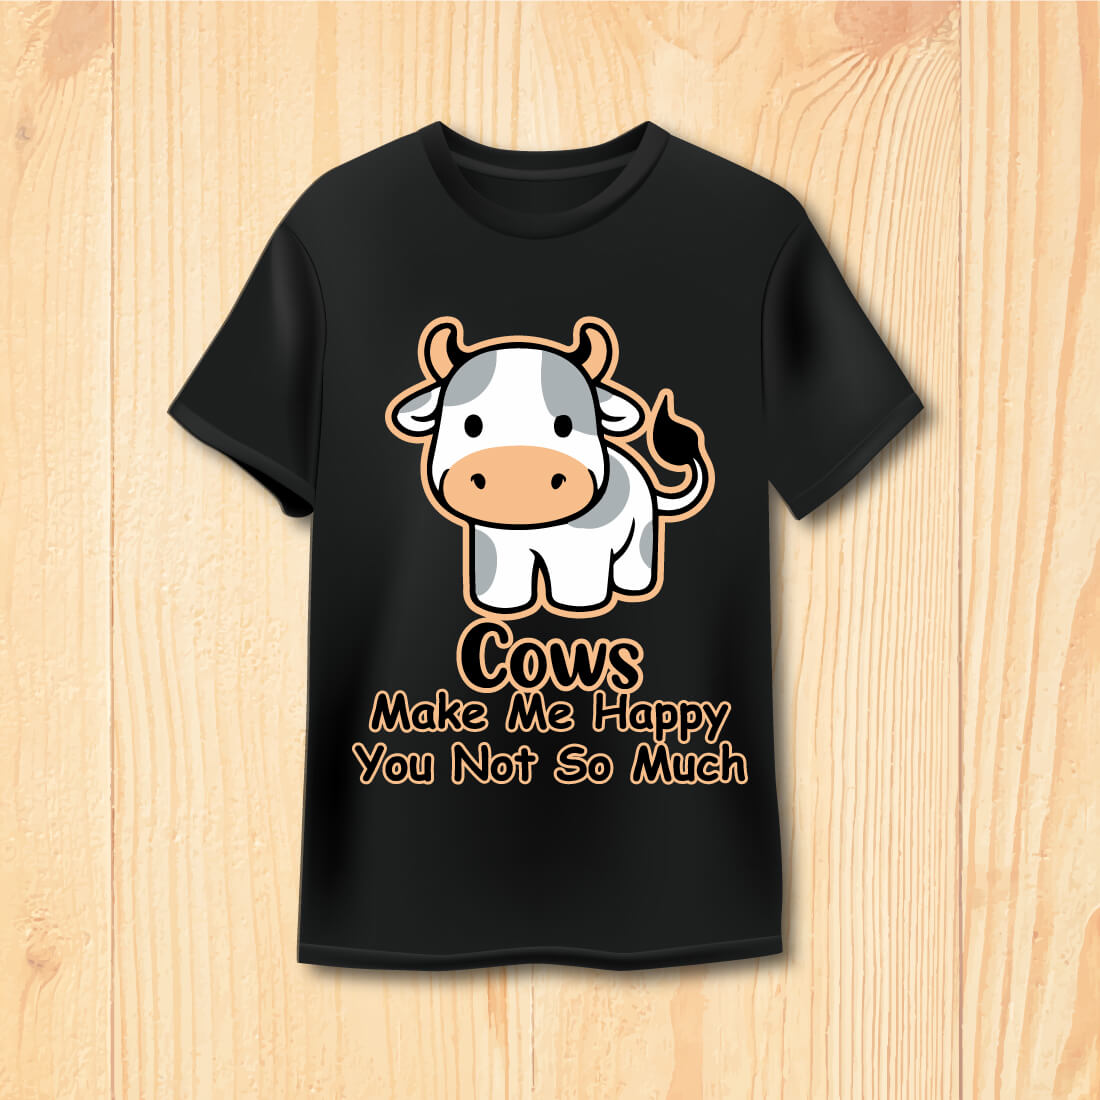 cow t shirt design 559